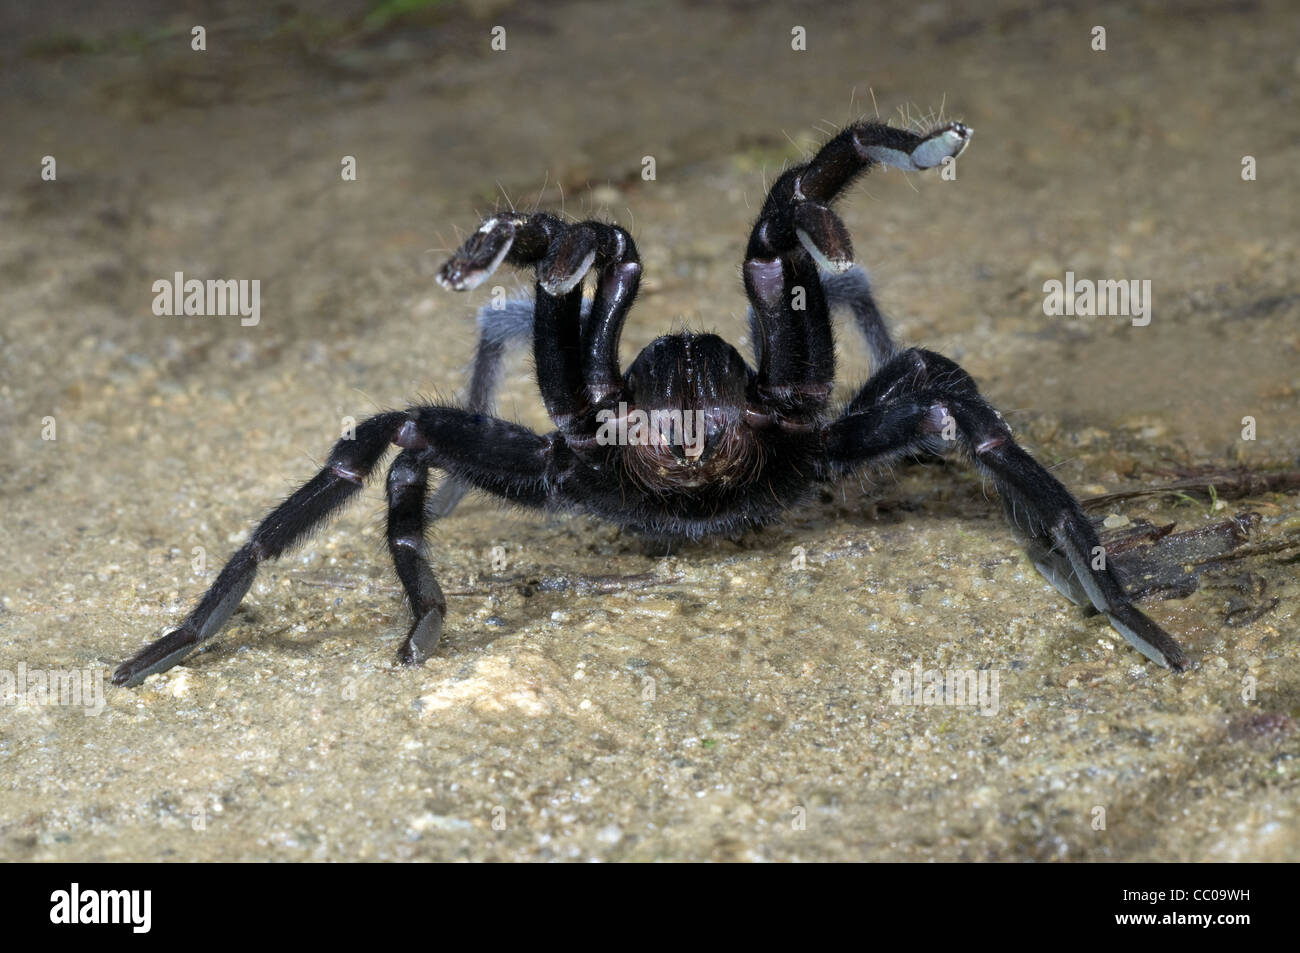 Mostrar agresión, Mygalomorphae araña, Arunachal Pradesh Foto de stock